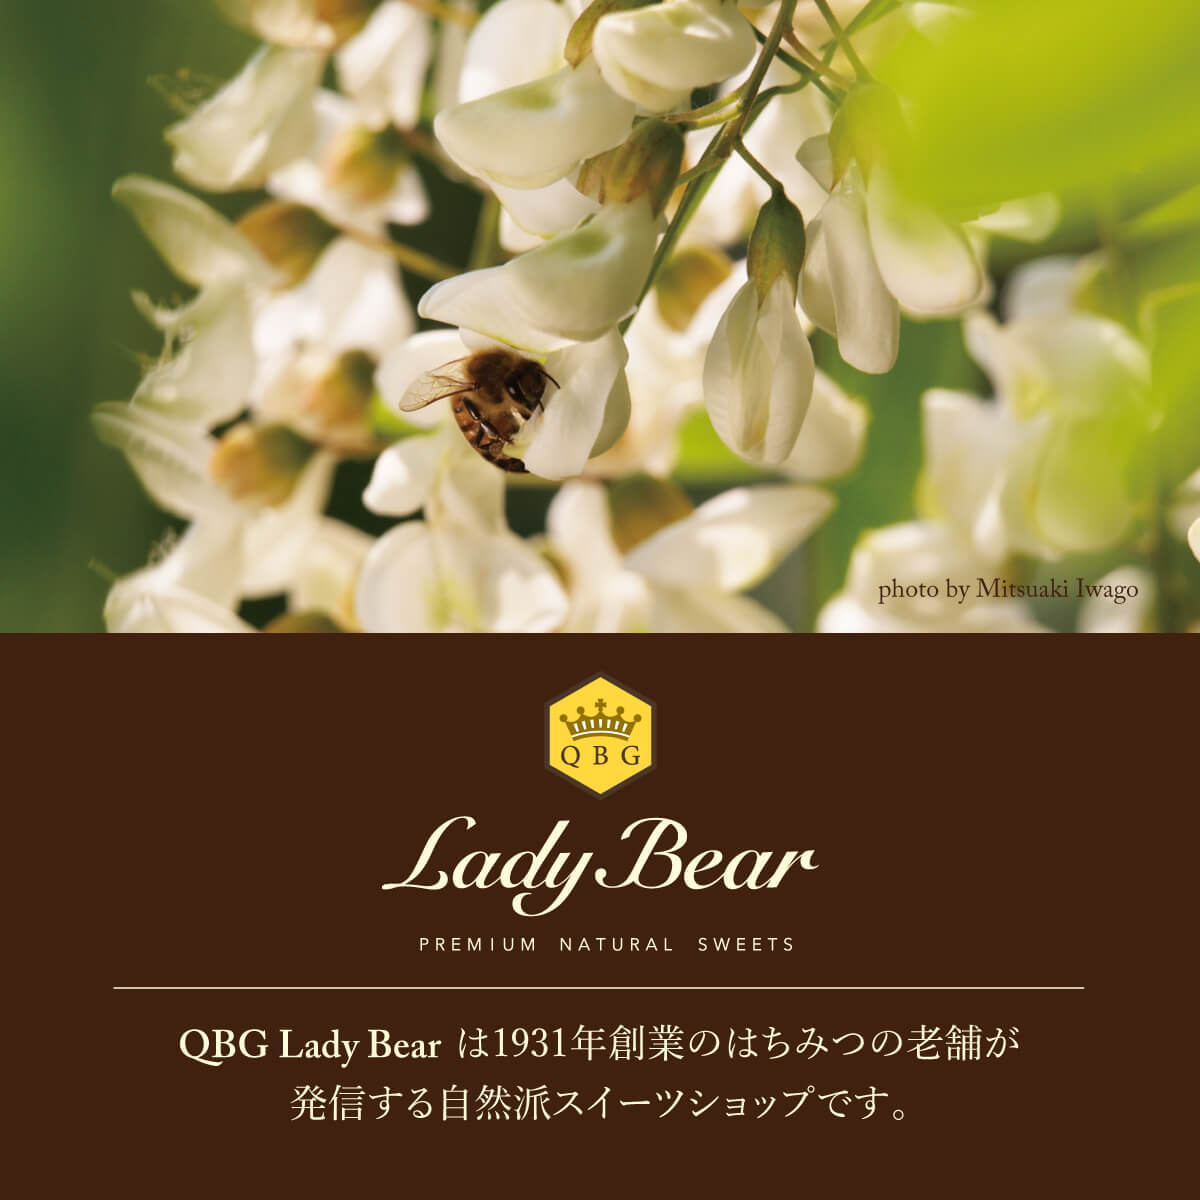 QBG Lady Bearは1931年創業のはちみつの老舗が発信する自然派スイーツショップです。